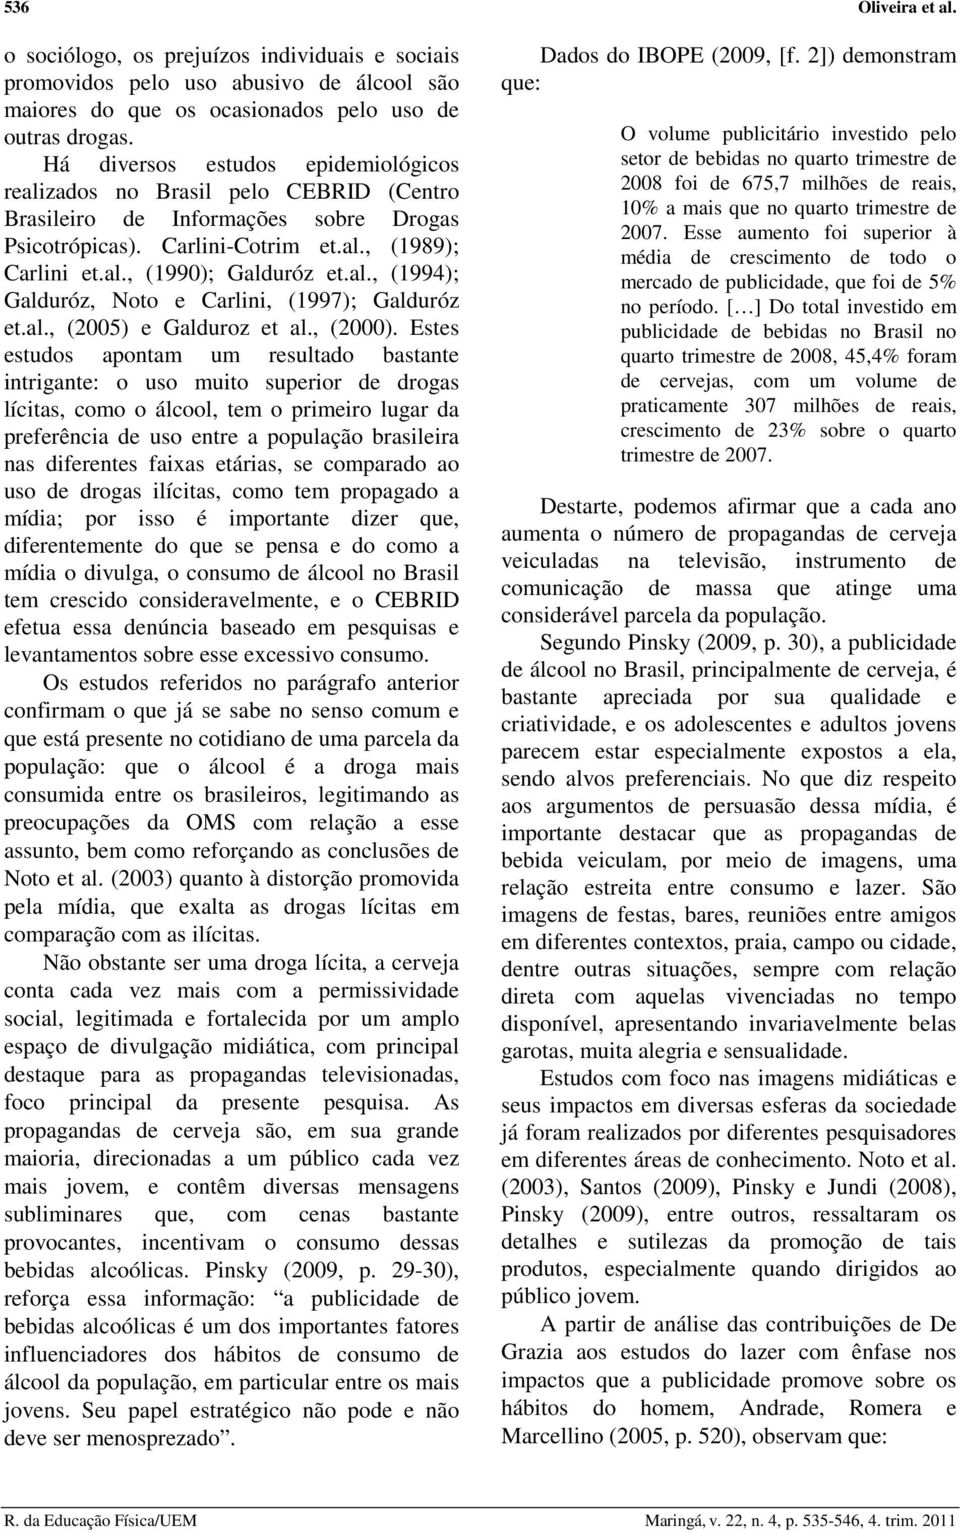 al., (1994); Galduróz, Noto e Carlini, (1997); Galduróz et.al., (2005) e Galduroz et al., (2000).